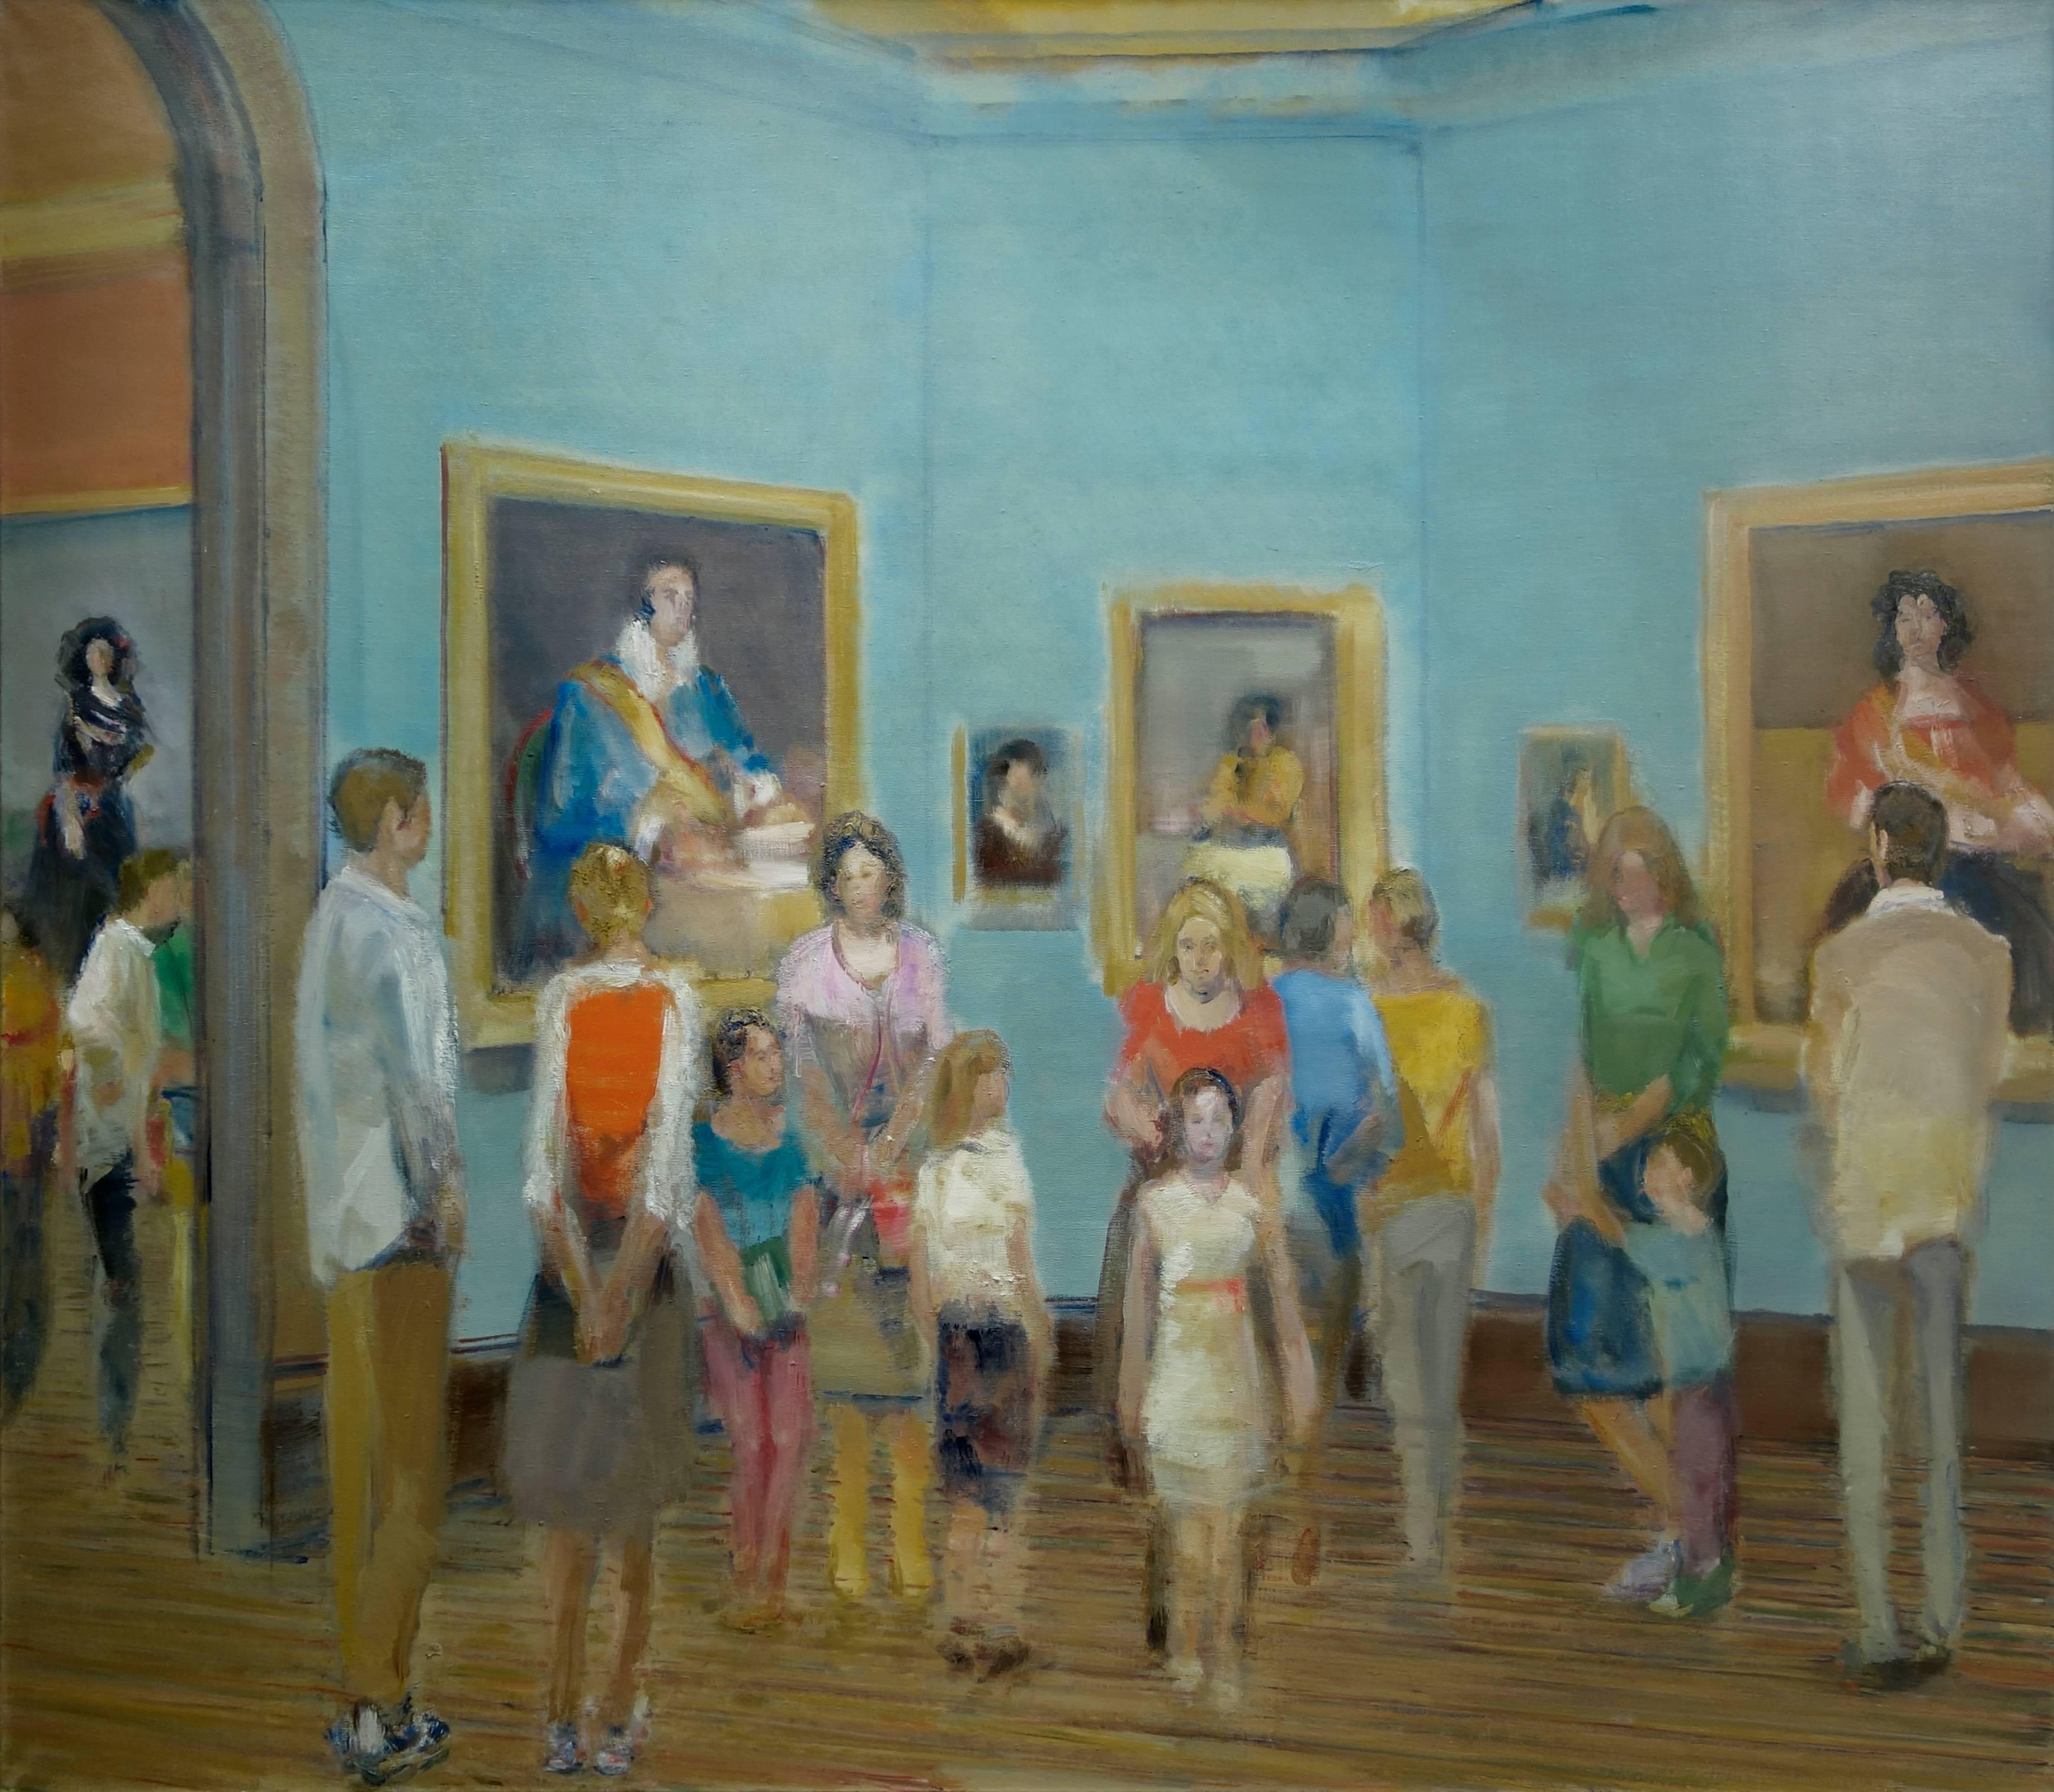 Simon Nicholas Figurative Painting - PRADO II, people standing in gallery, blue walls, paintings on wall